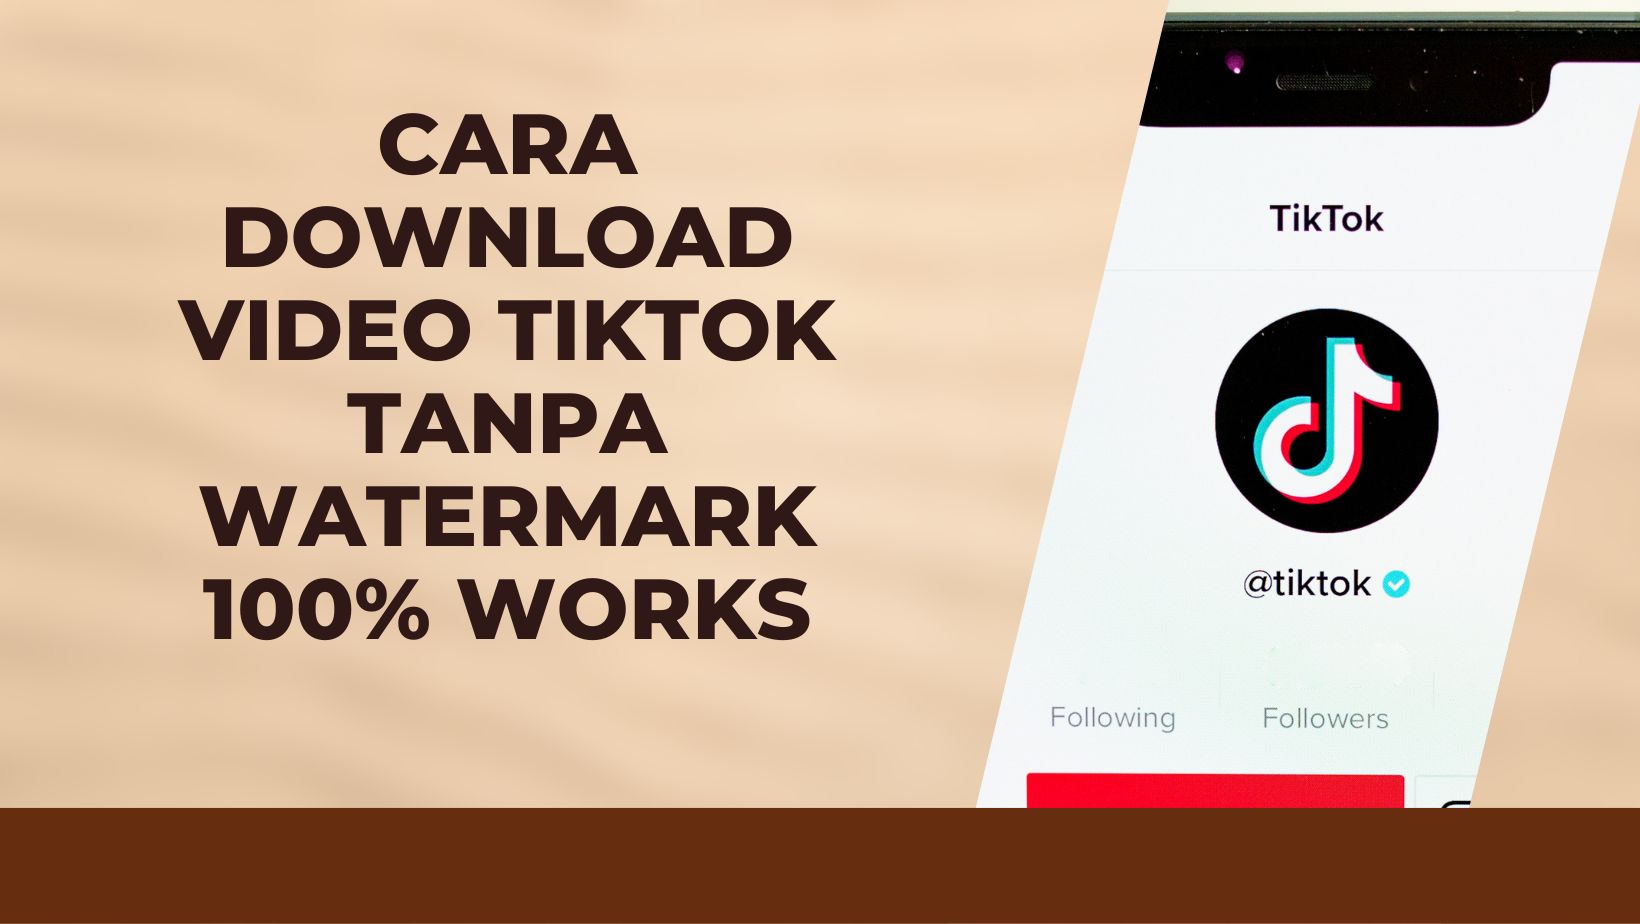 Cara Download Video TikTok Tanpa Watermark 100% Works